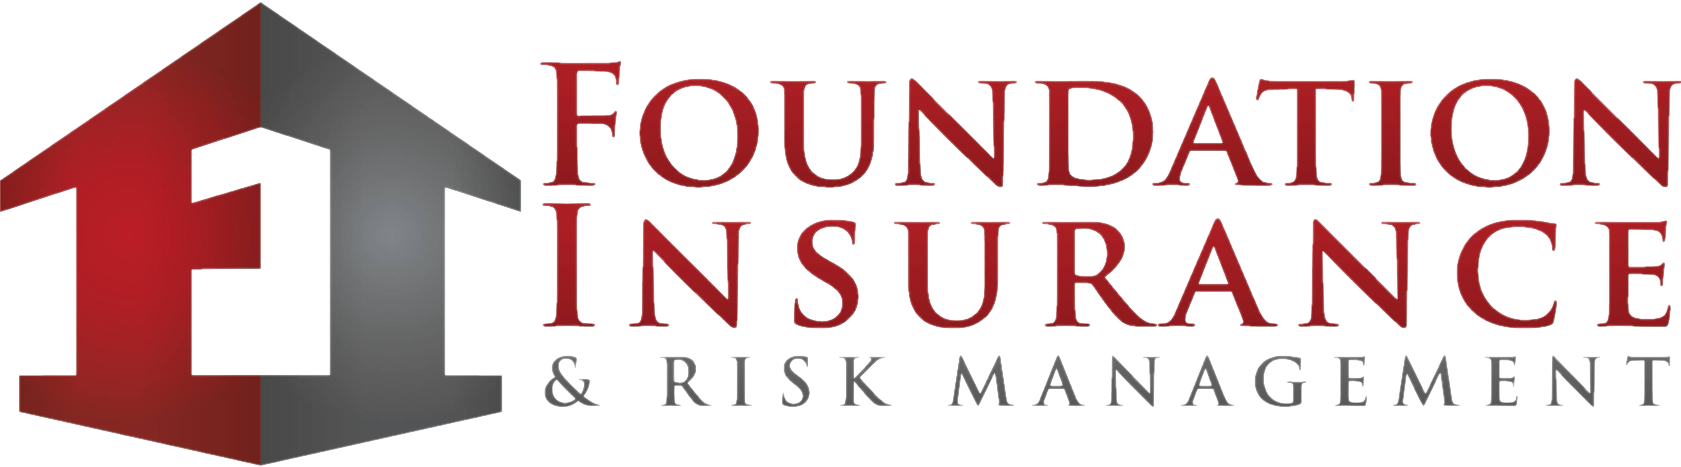 Foundation Insurance